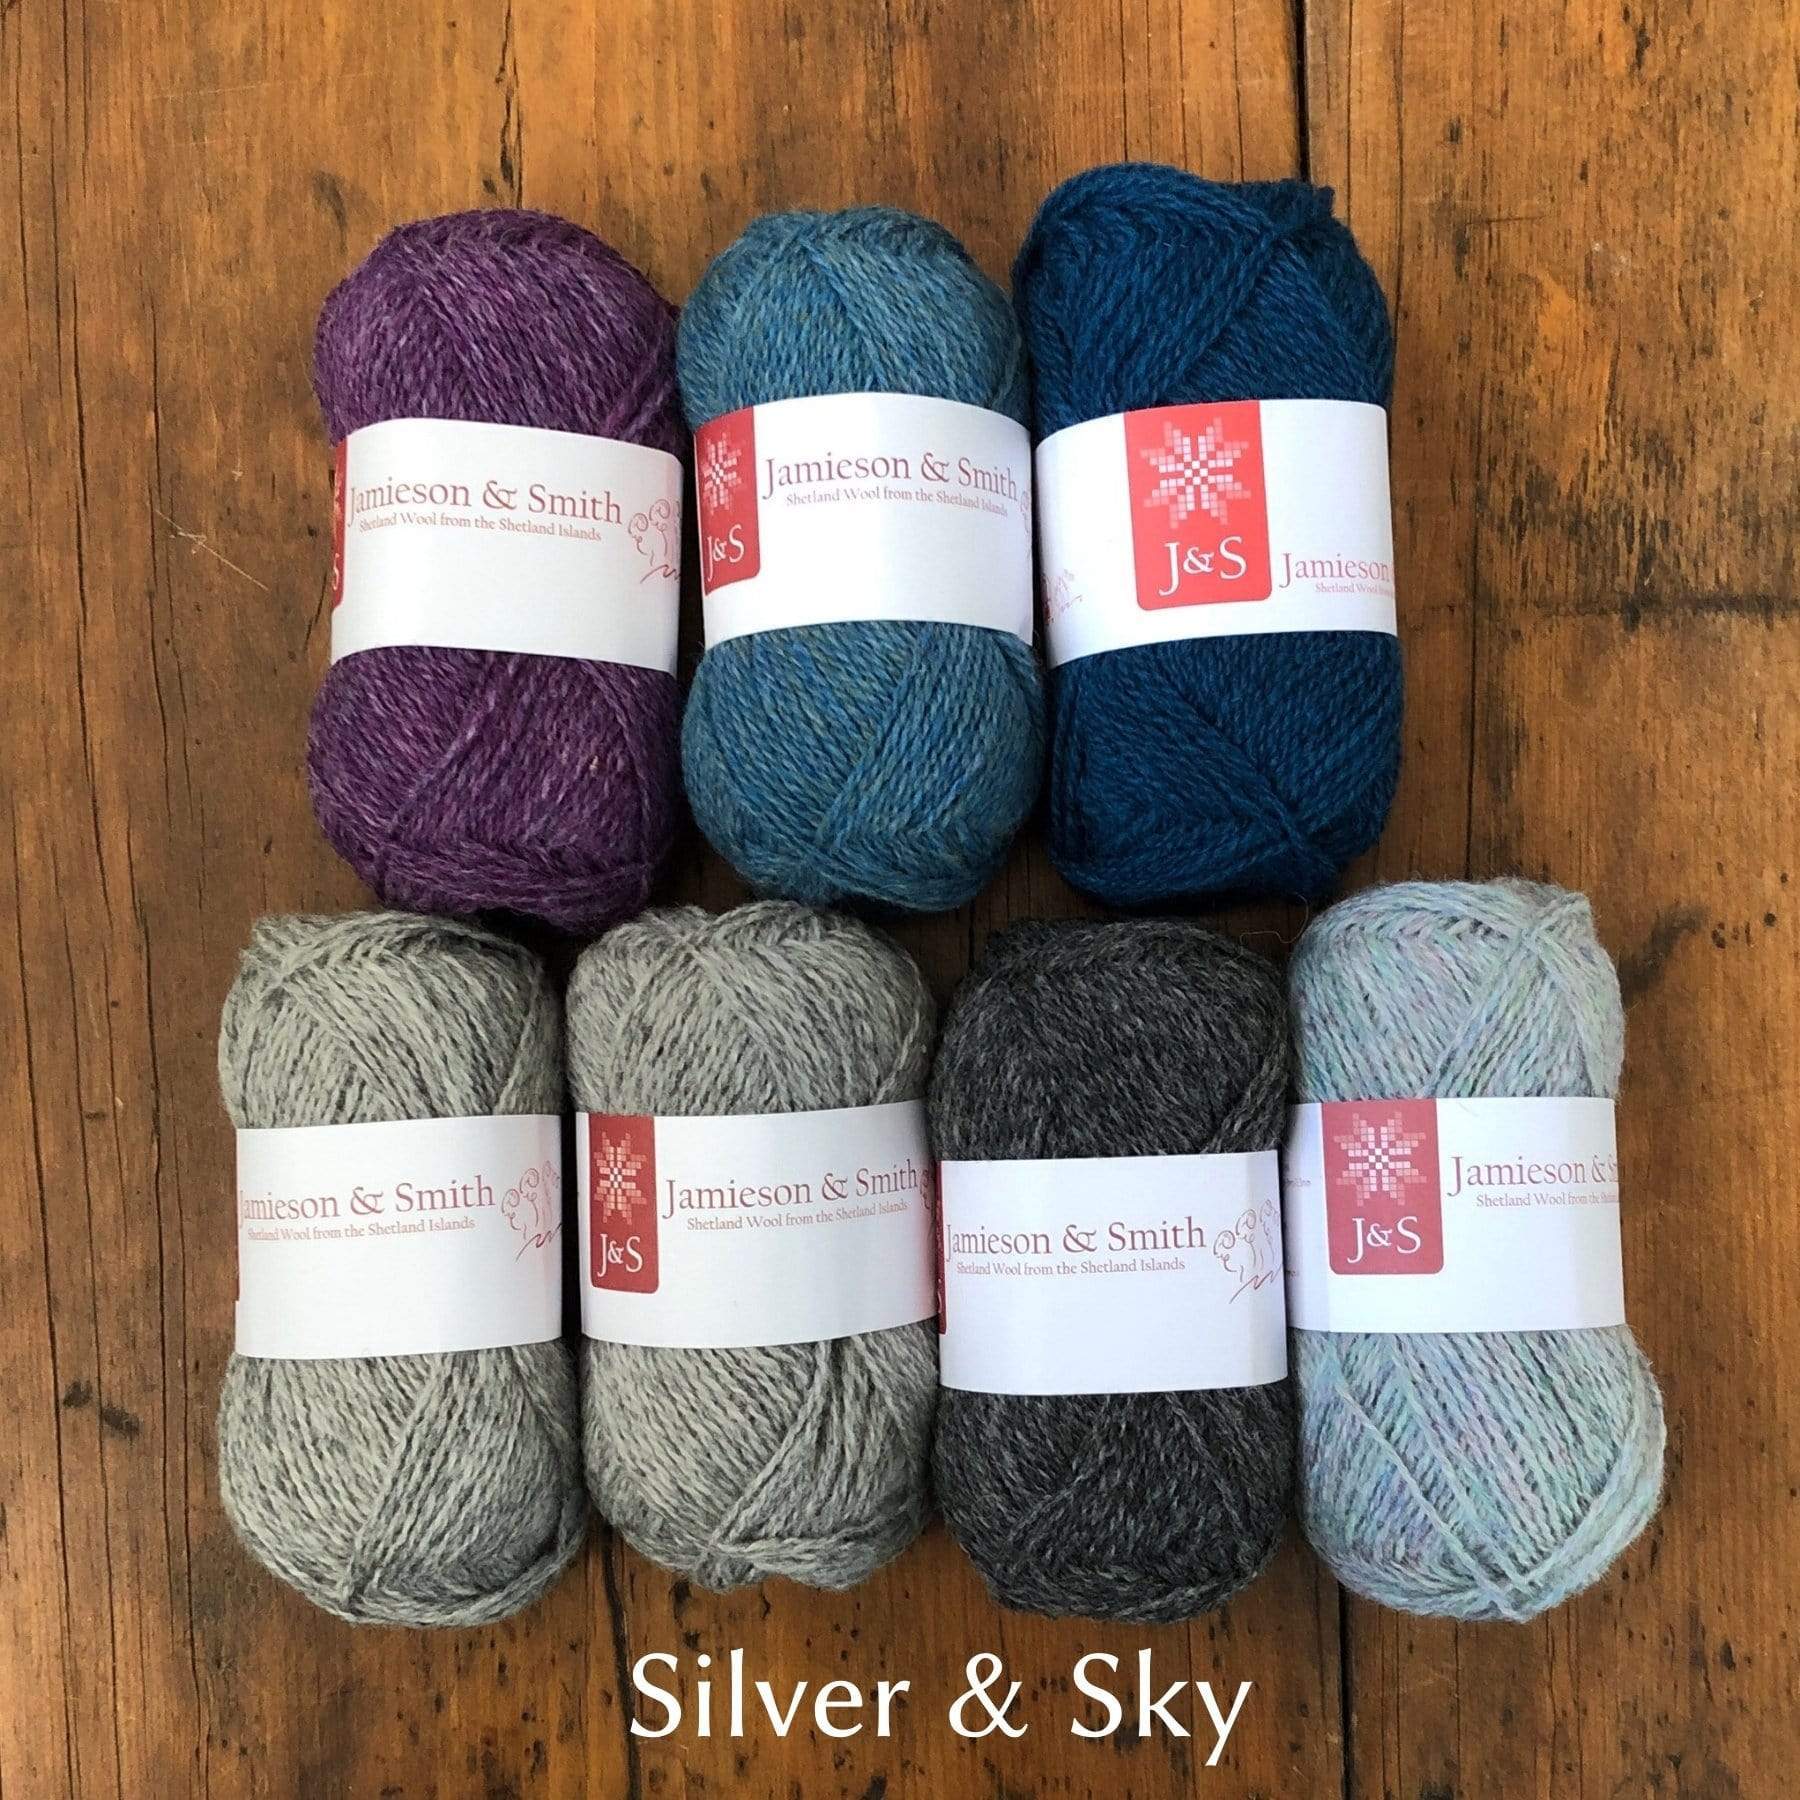 Jamieson & Smith Yarns in greys, light blue, medium blue, navy blue and purple.